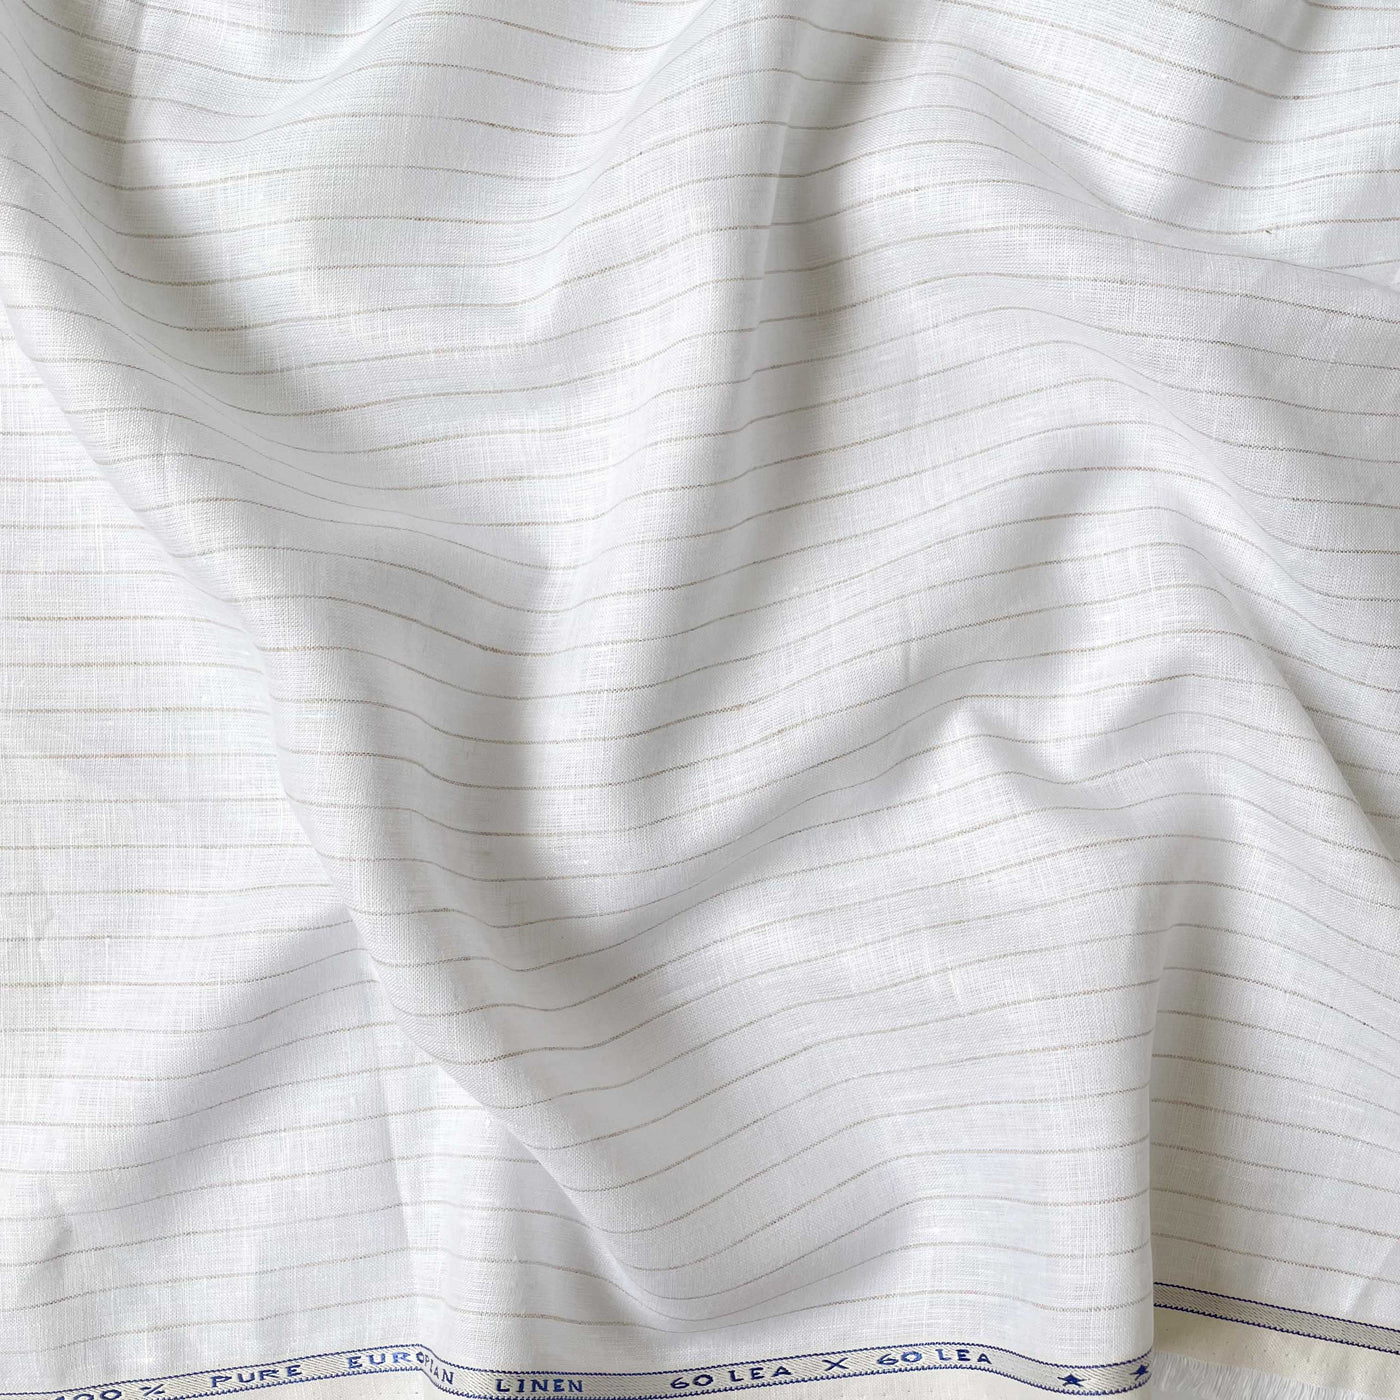 Premium Linen Fabric Fabric Tuscan Beige & White Pencil Stripes Premium 60 Lea Pure Linen Fabric (Width 58 Inches)